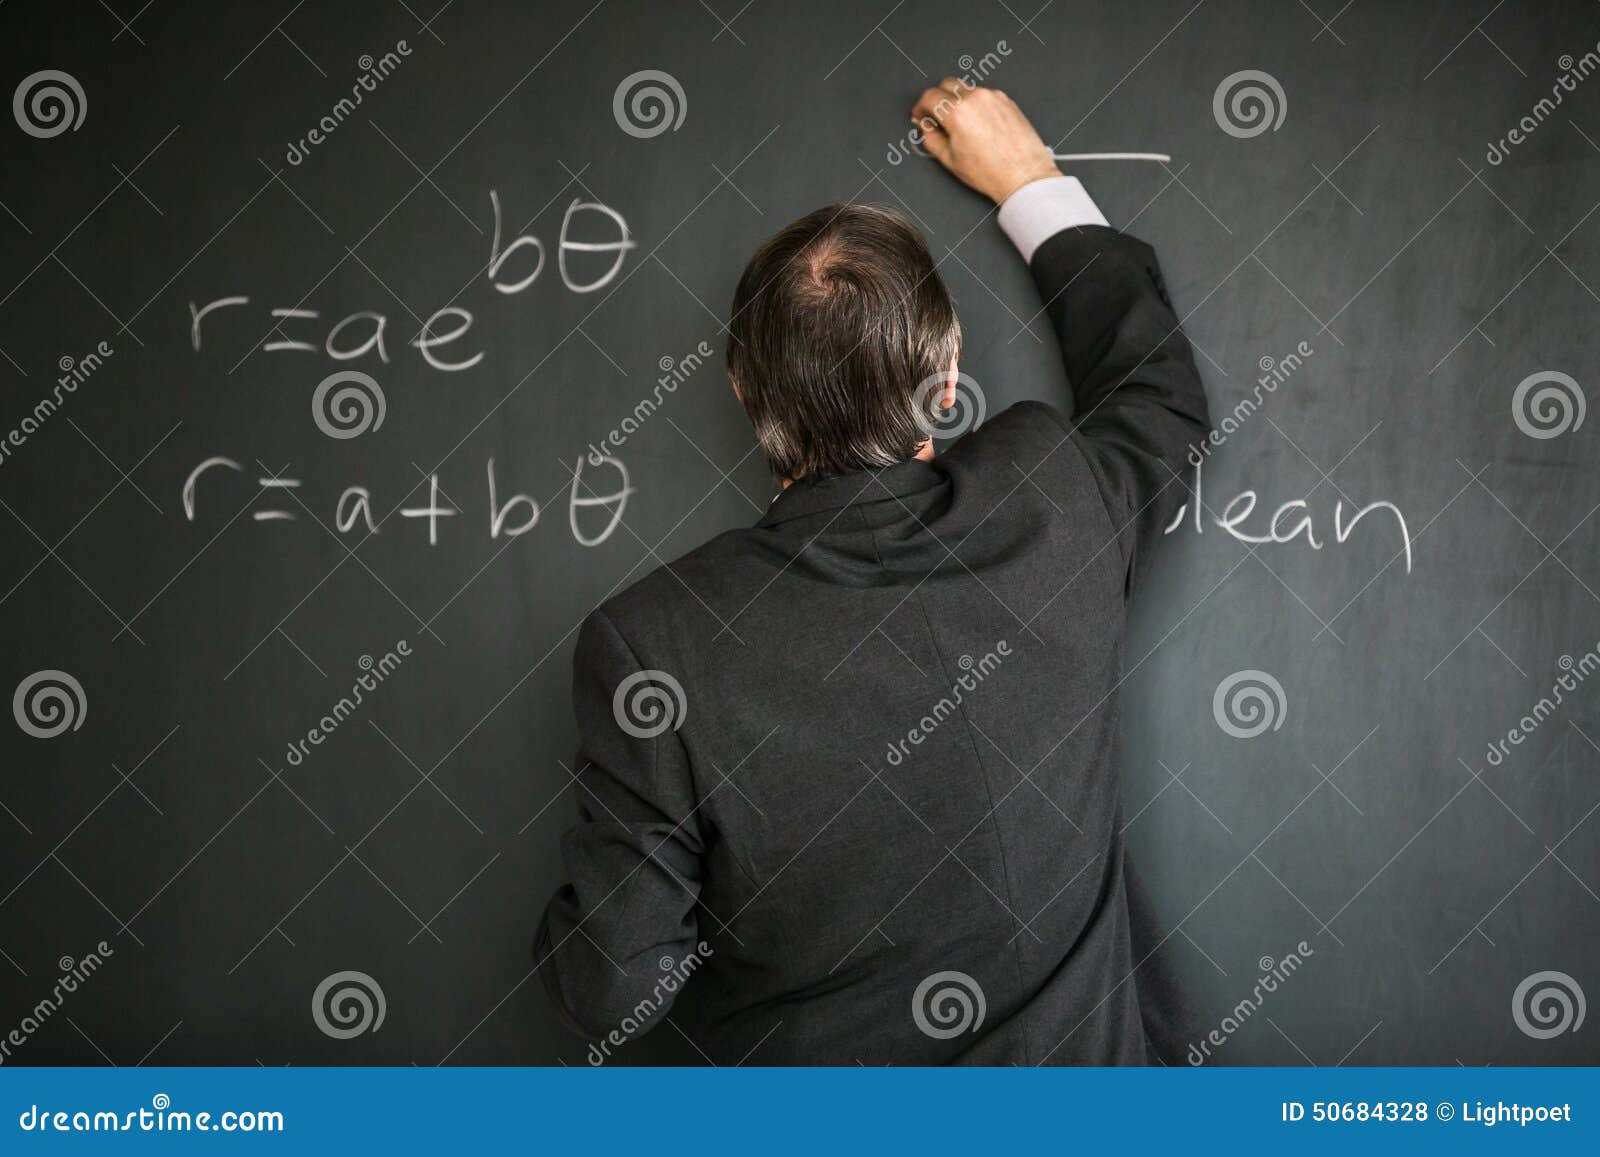 senior male teacher teaching mathematics